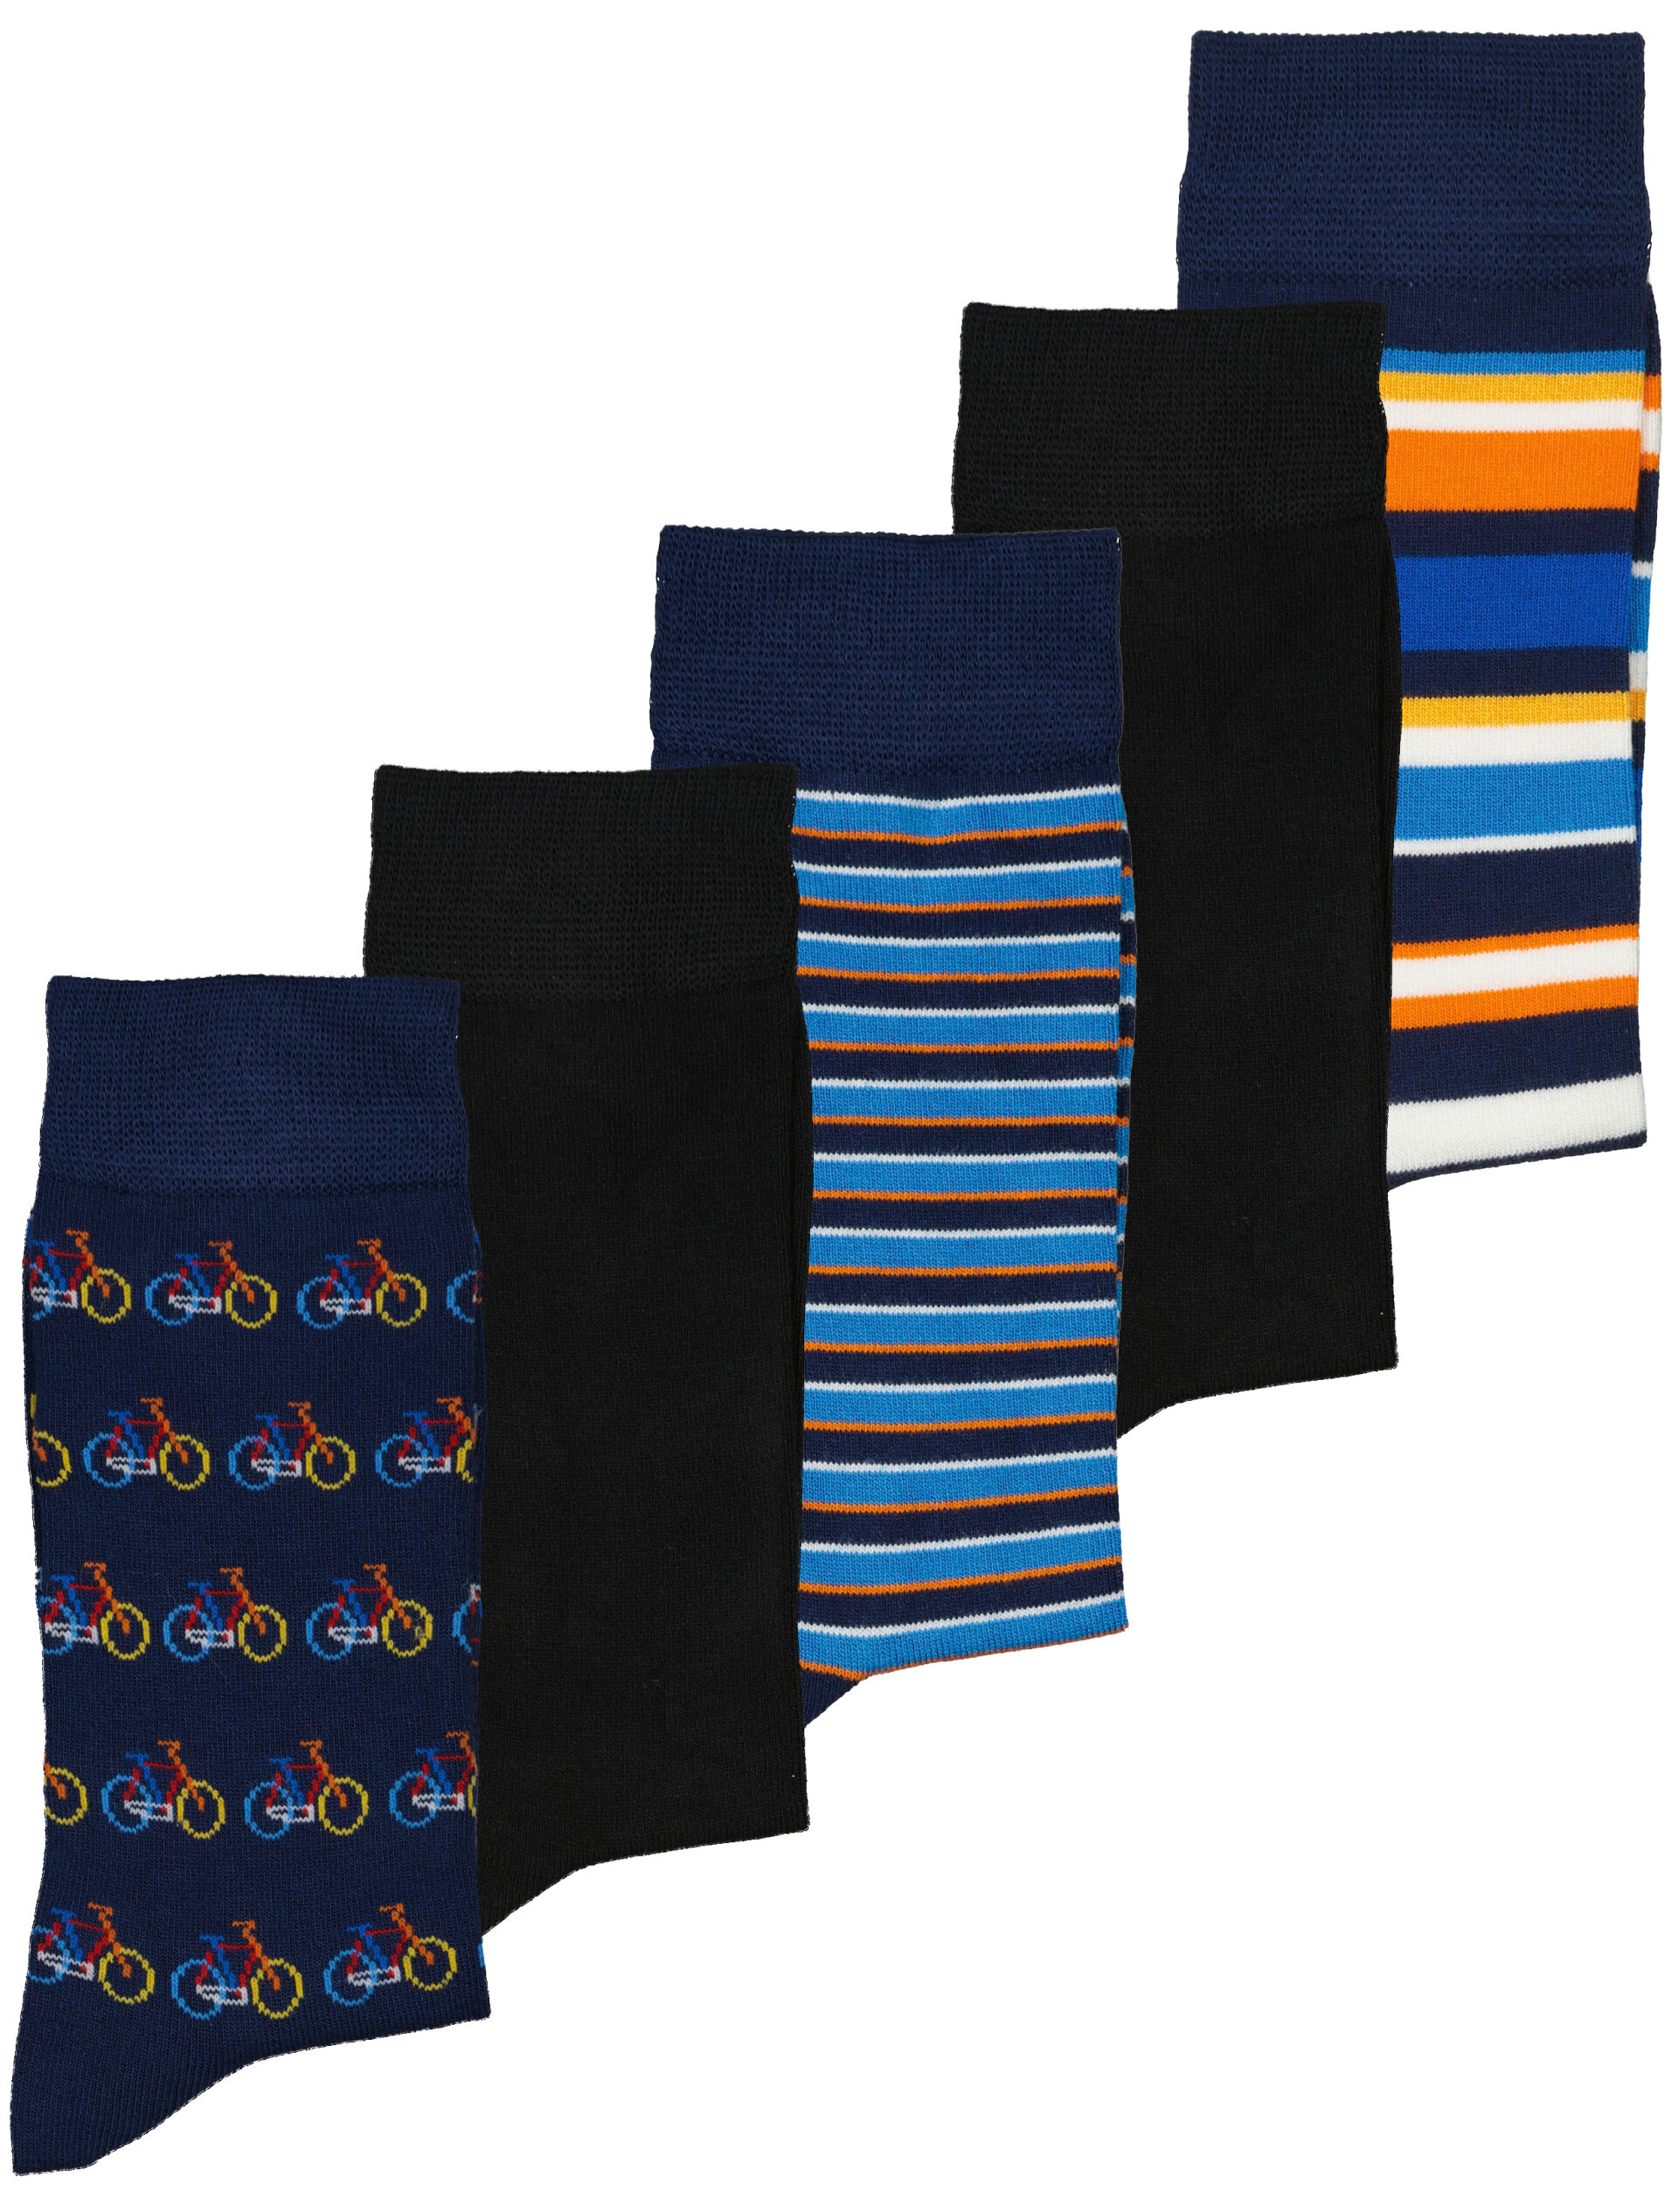 Socks 30-991065